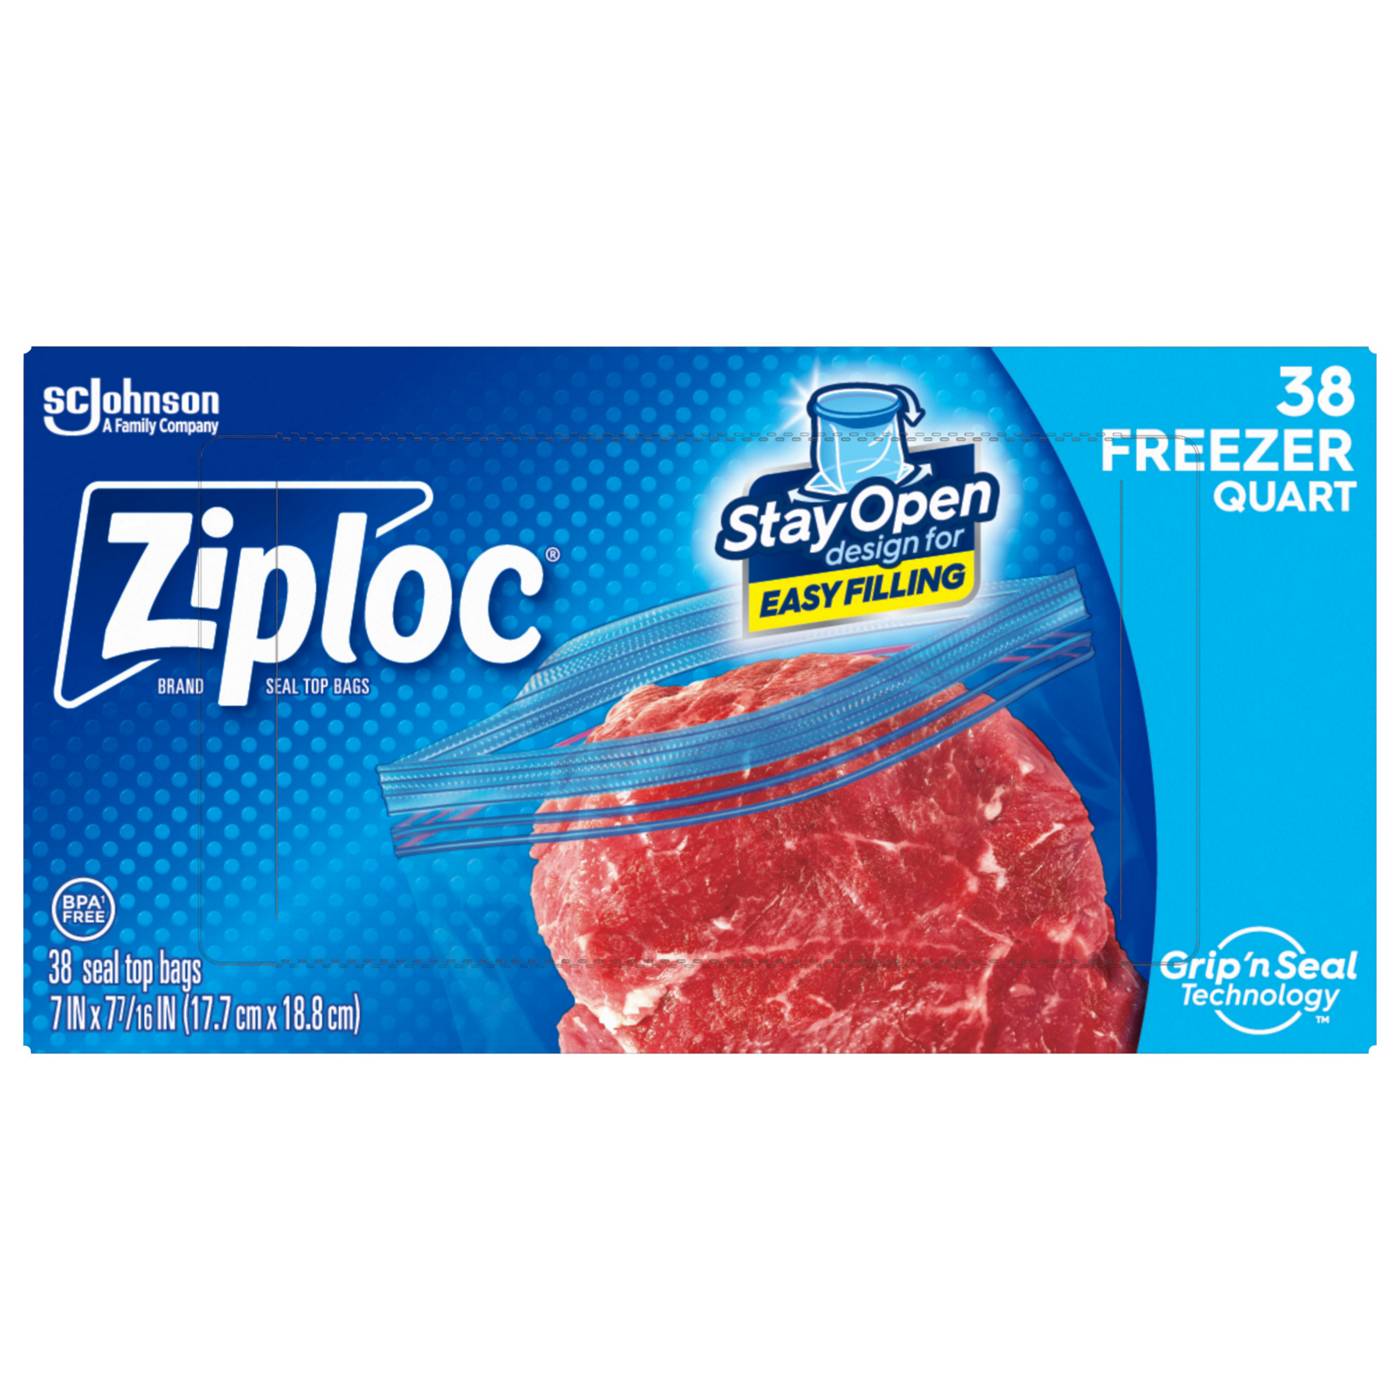 Ziploc Double Zipper Quart Freezer Bags; image 1 of 12